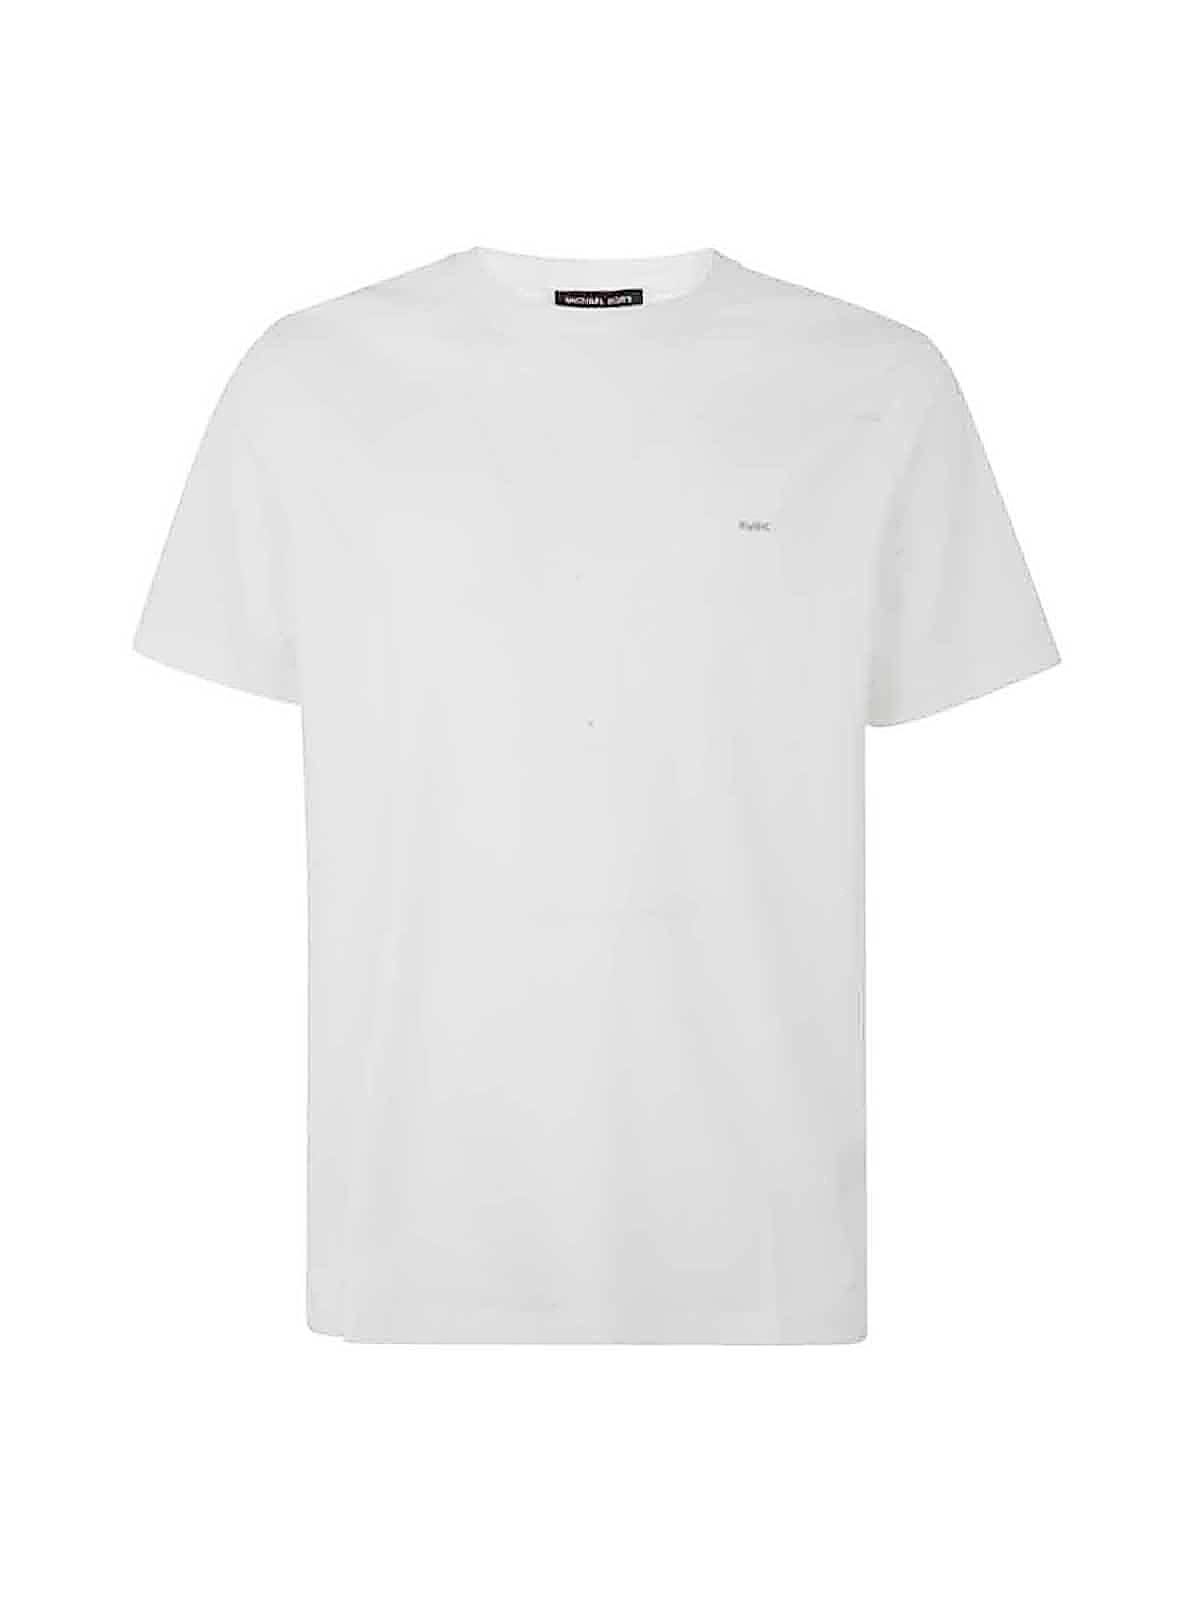 Michael Kors Sleek Mk Crew T-shirt